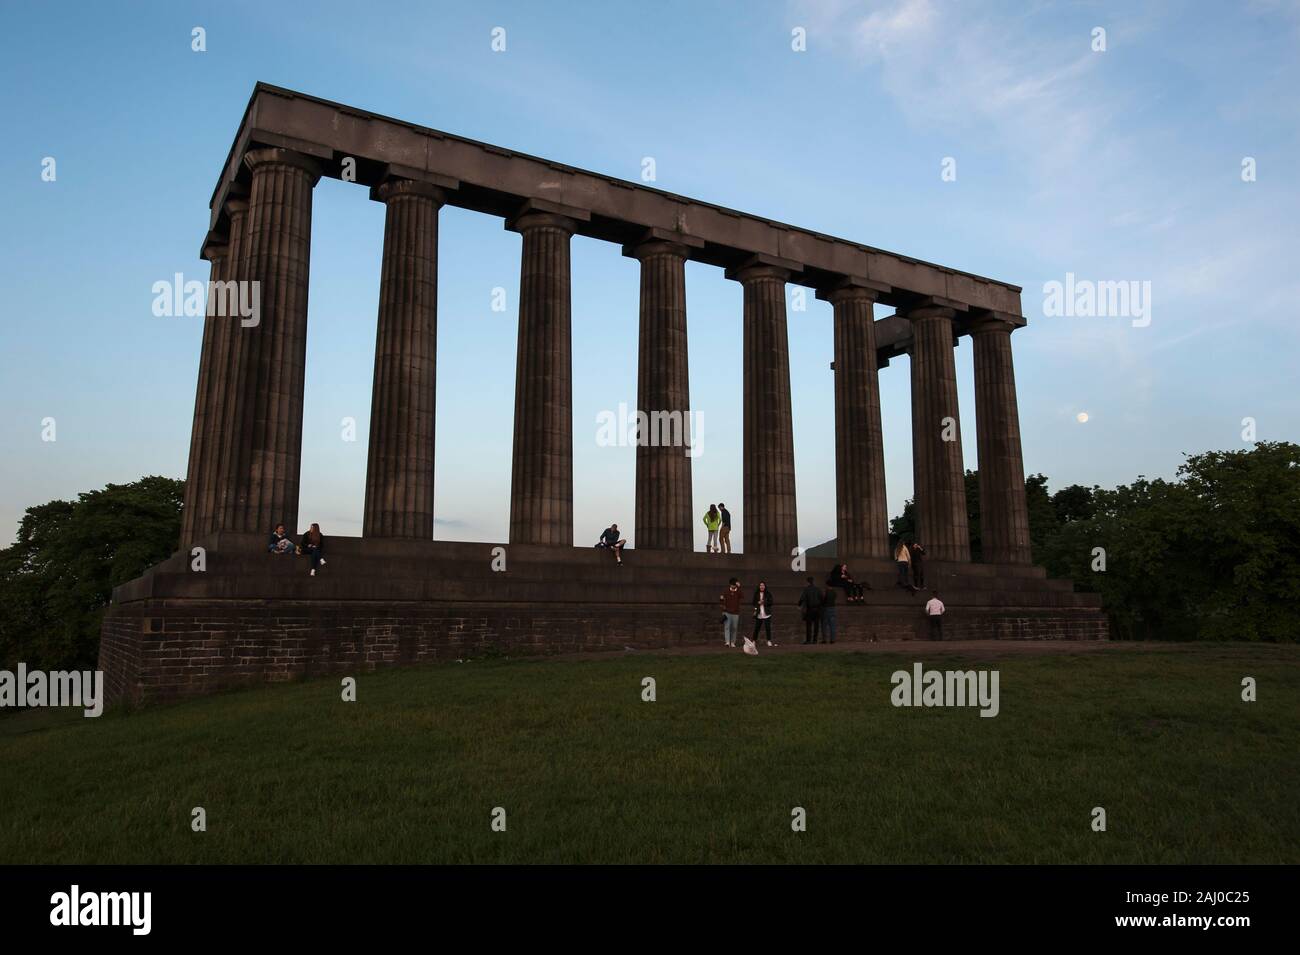 EDINBURGH, SCOTLAND - JUNE 18, 2016 - National Monument of Scotland in silhouette on Calton Hill, Edinburgh, Scotland Stock Photo